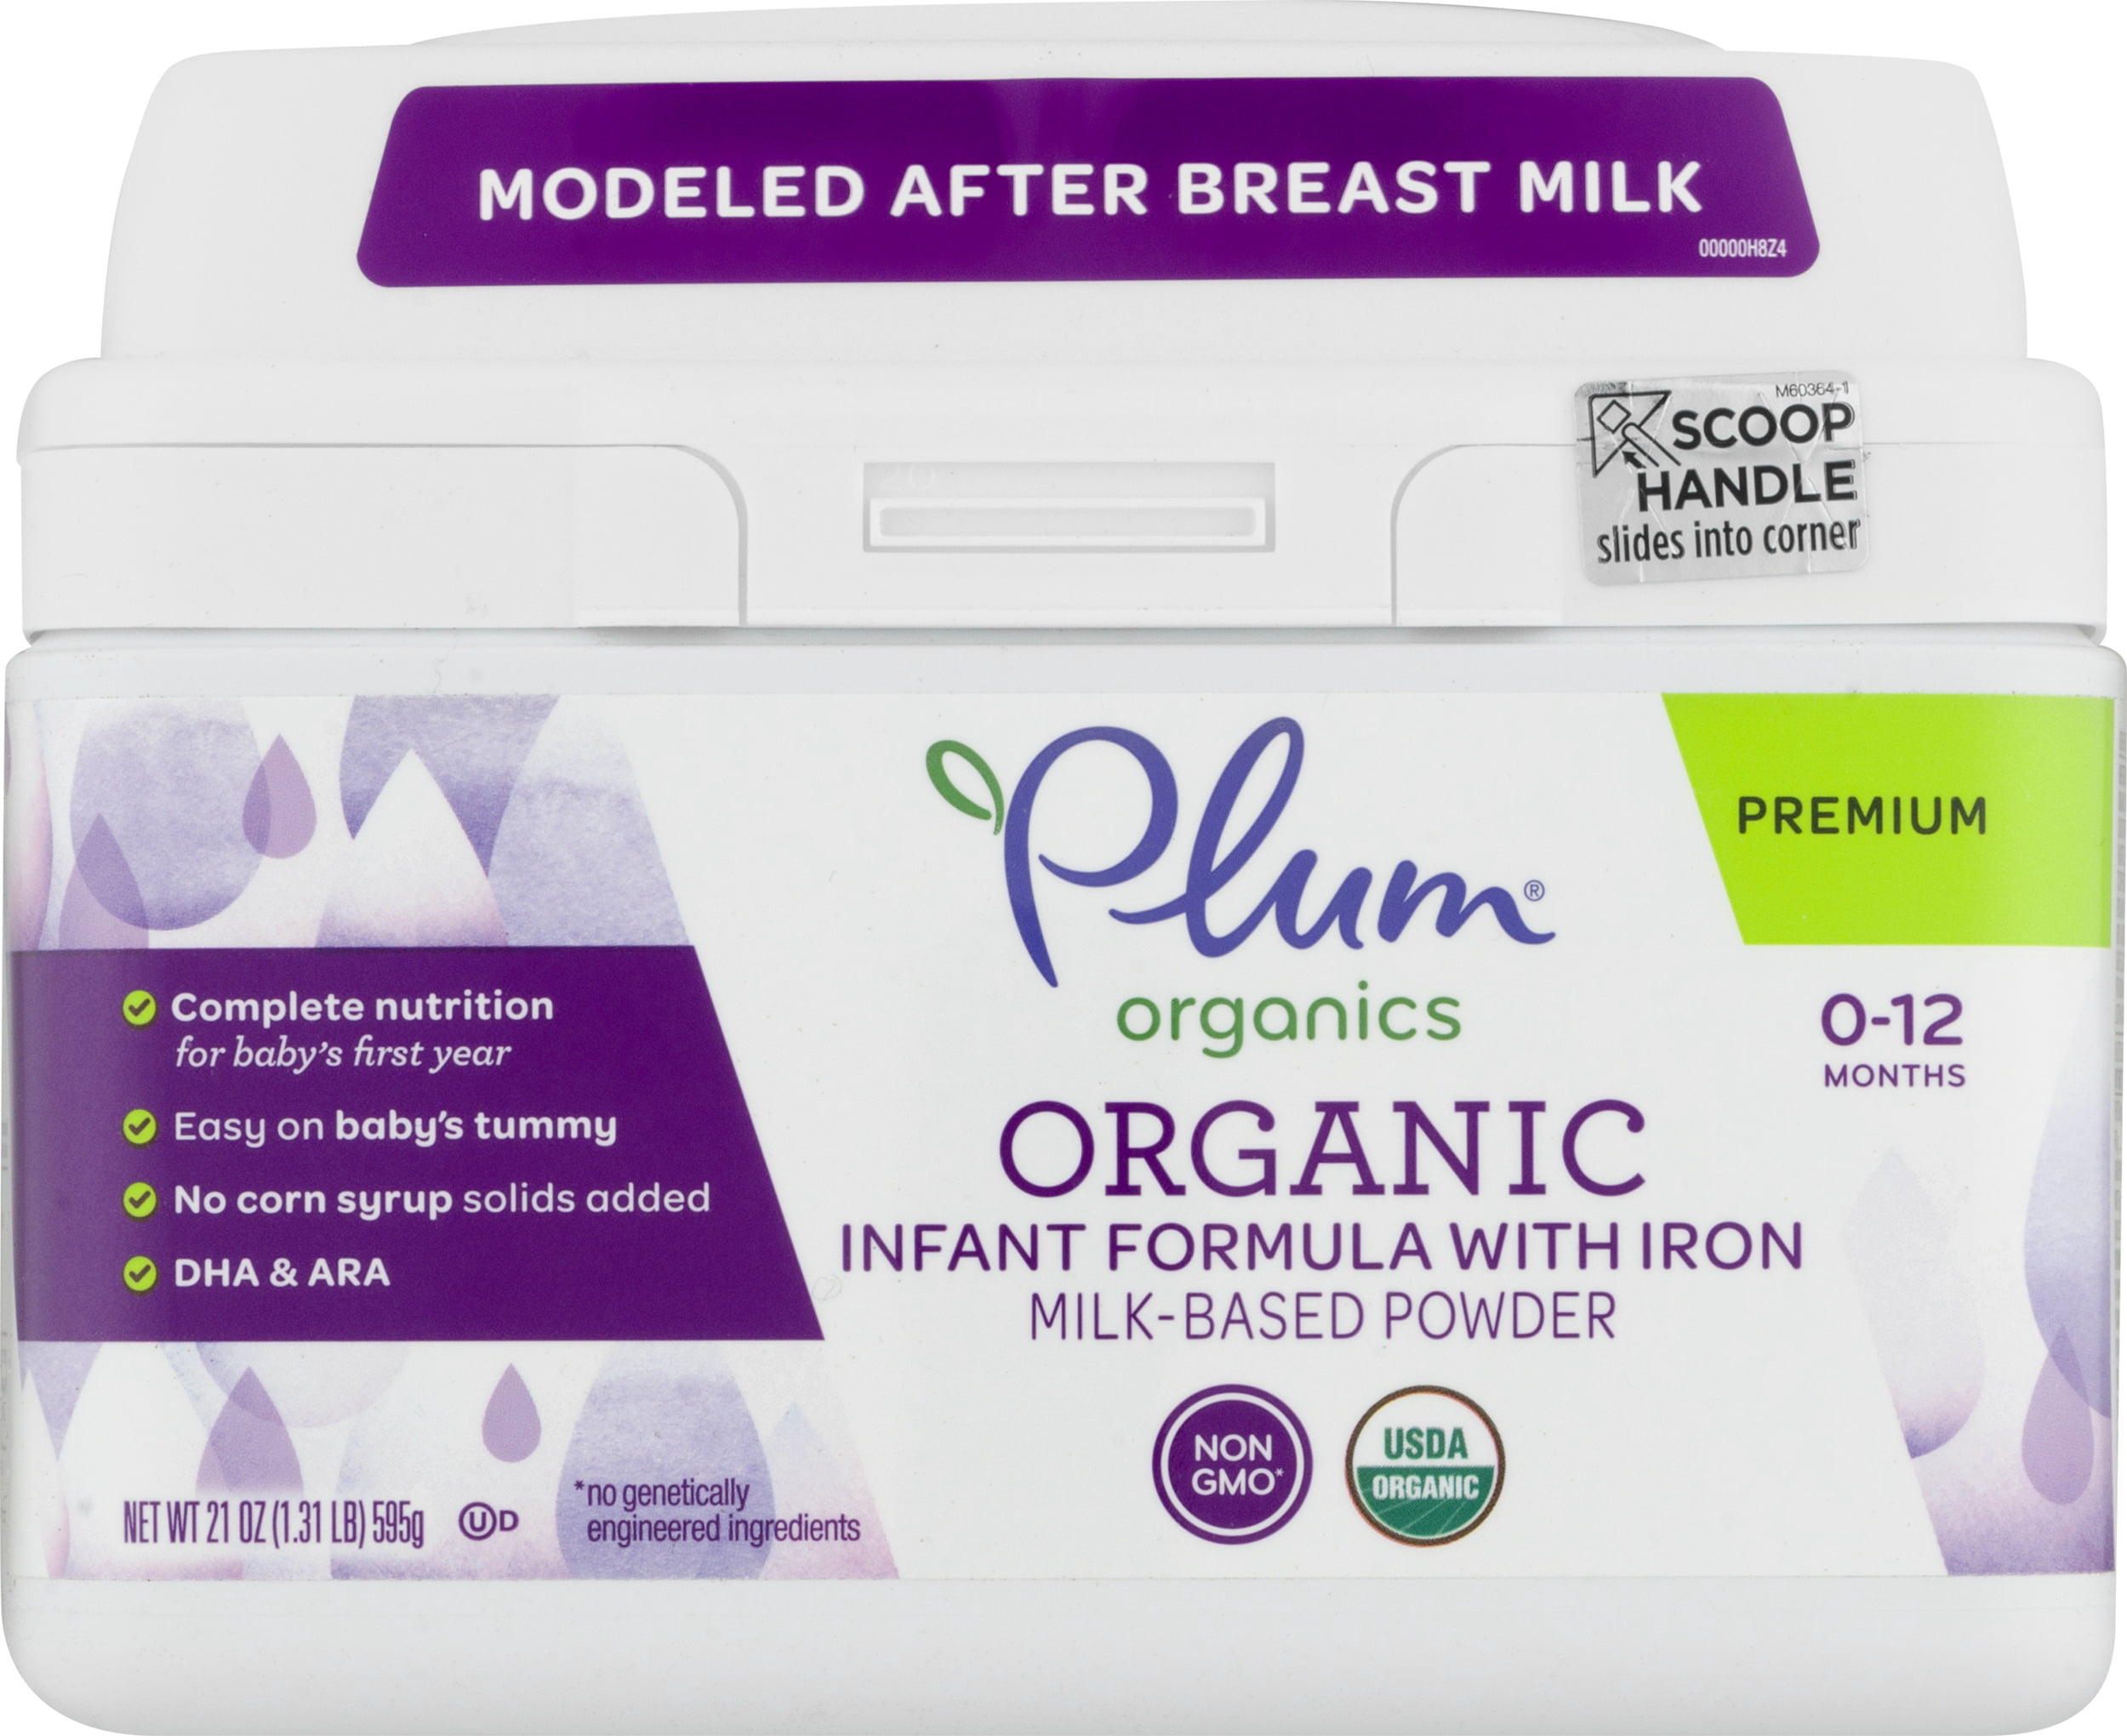 plum organics gentle formula target